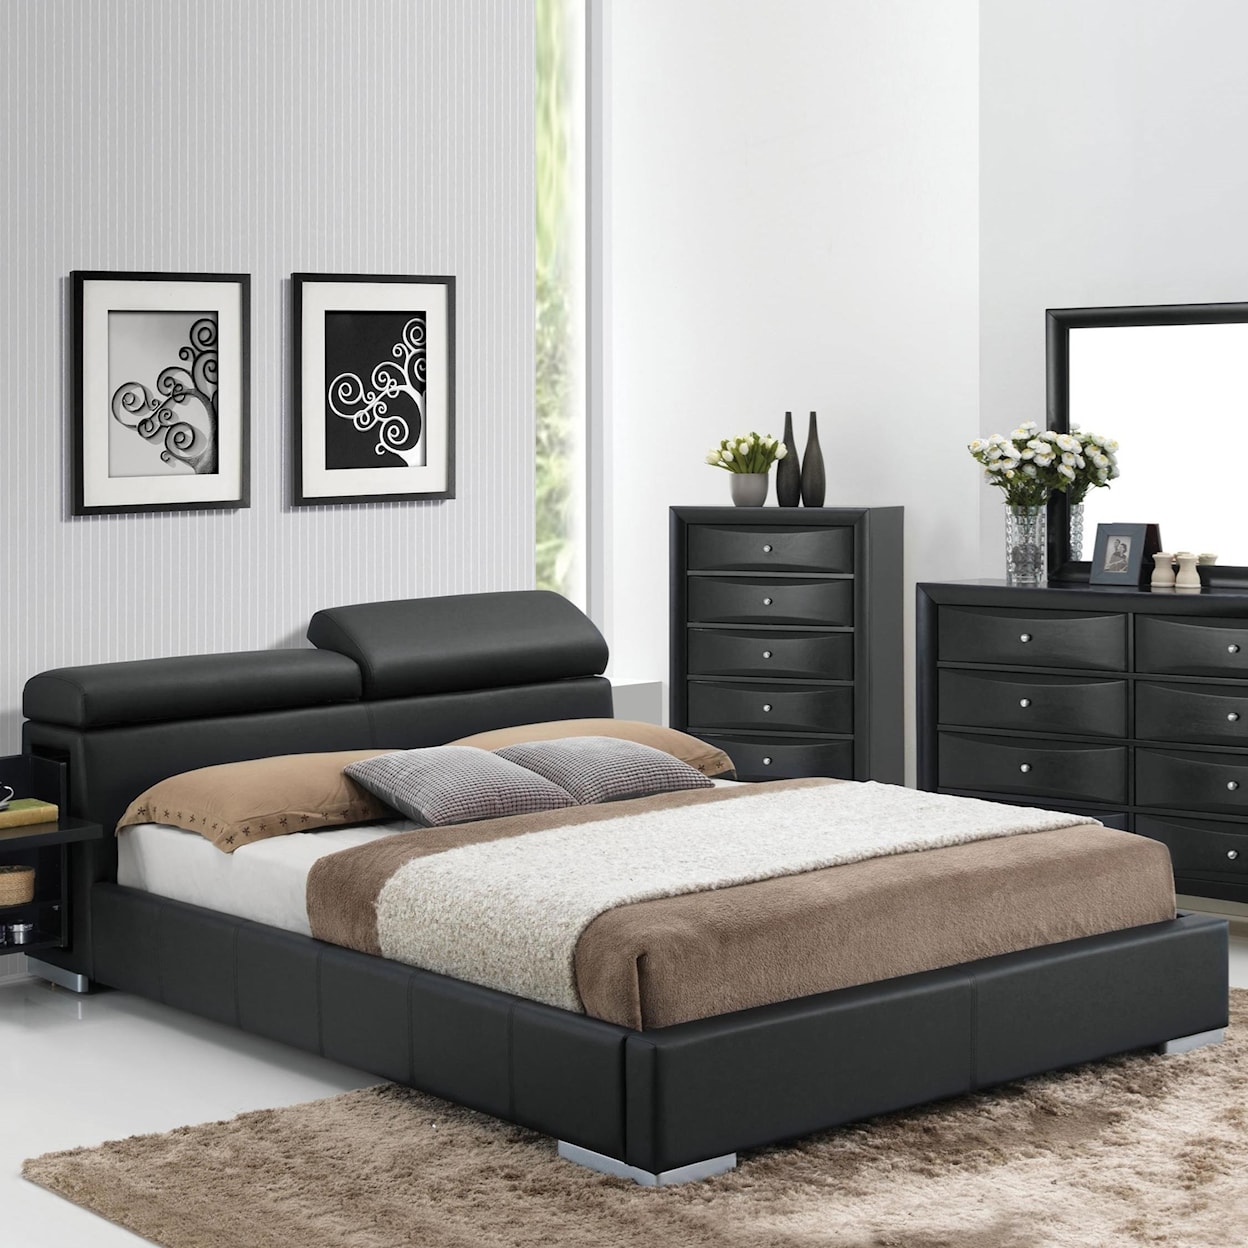 Acme Furniture Manjot Queen Bed